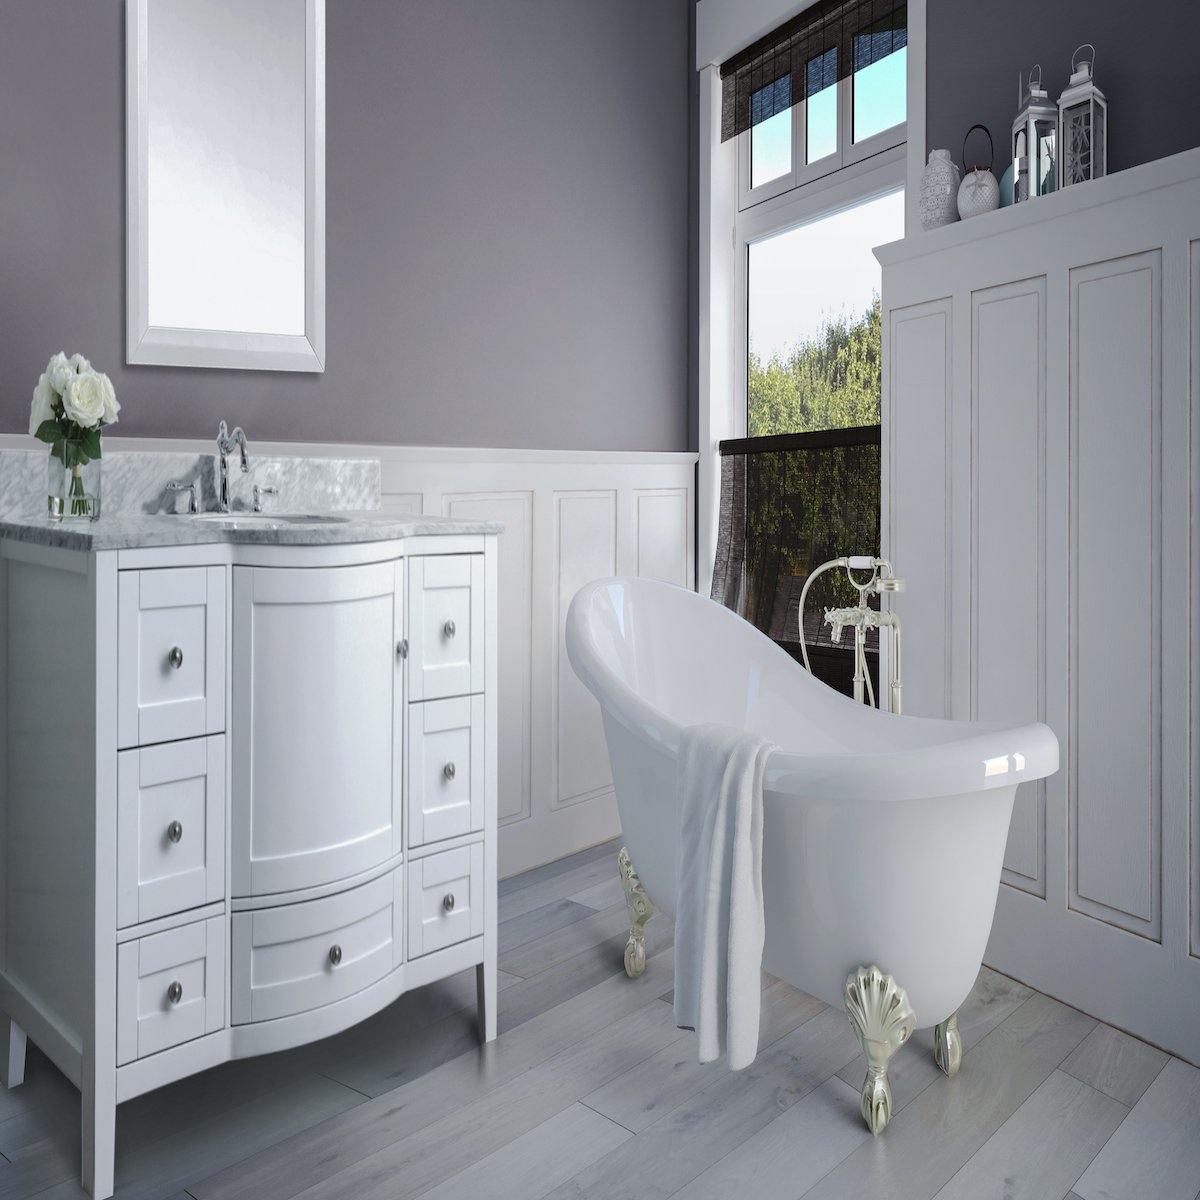 Ancerre Designs Lauren 48 Inch White Single Vanity with Nickel Hardware in Bathroom #hardware_burhsed nickel